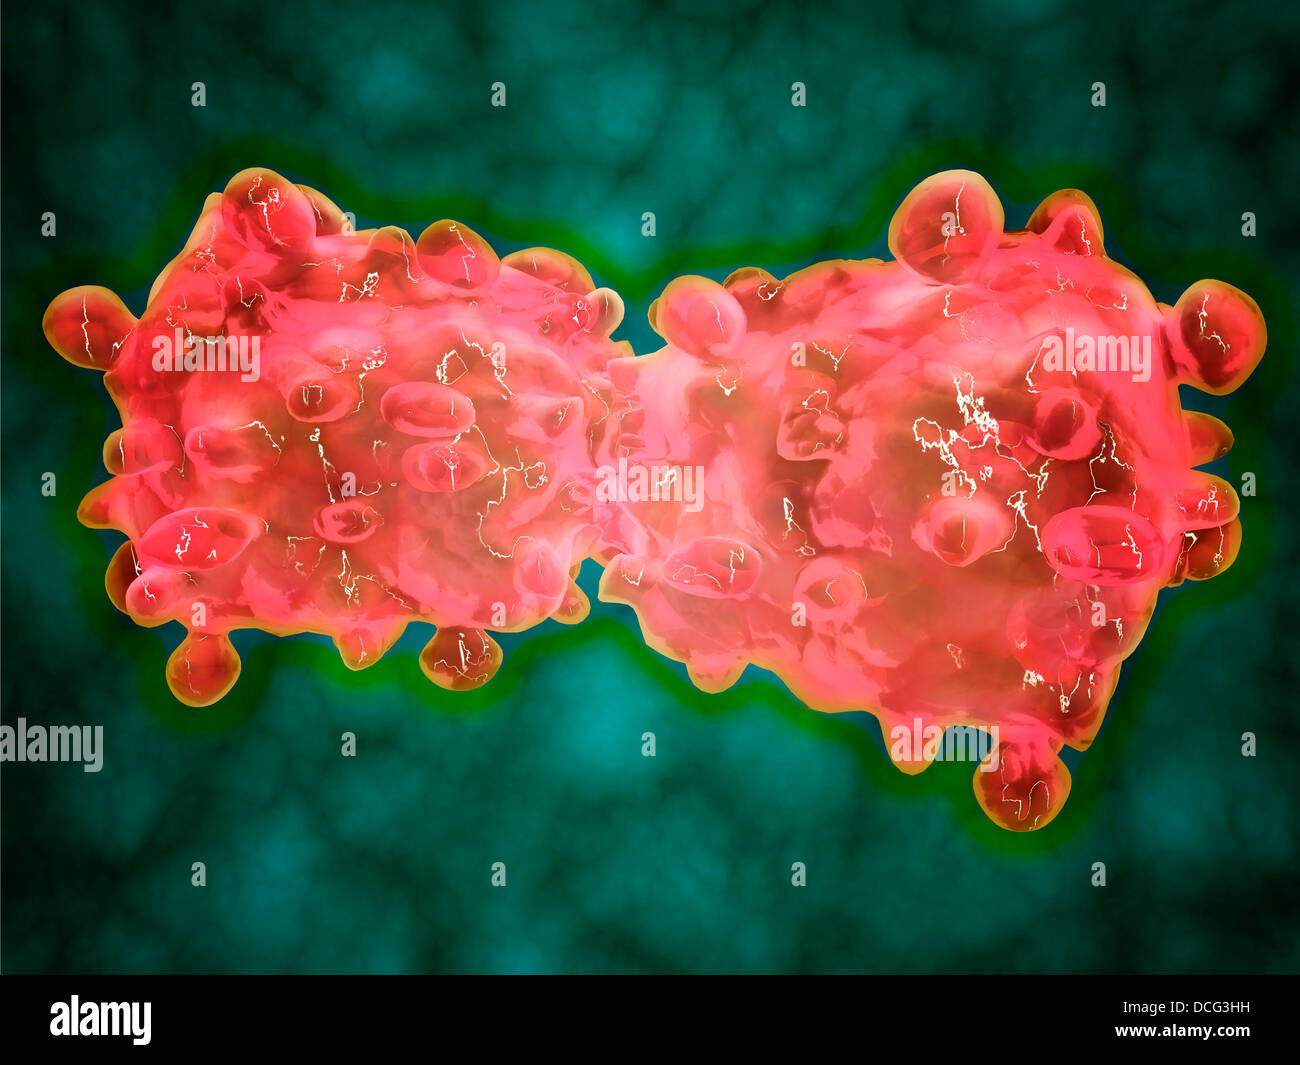 Microscopic view of a leukemia cell. Stock Photo